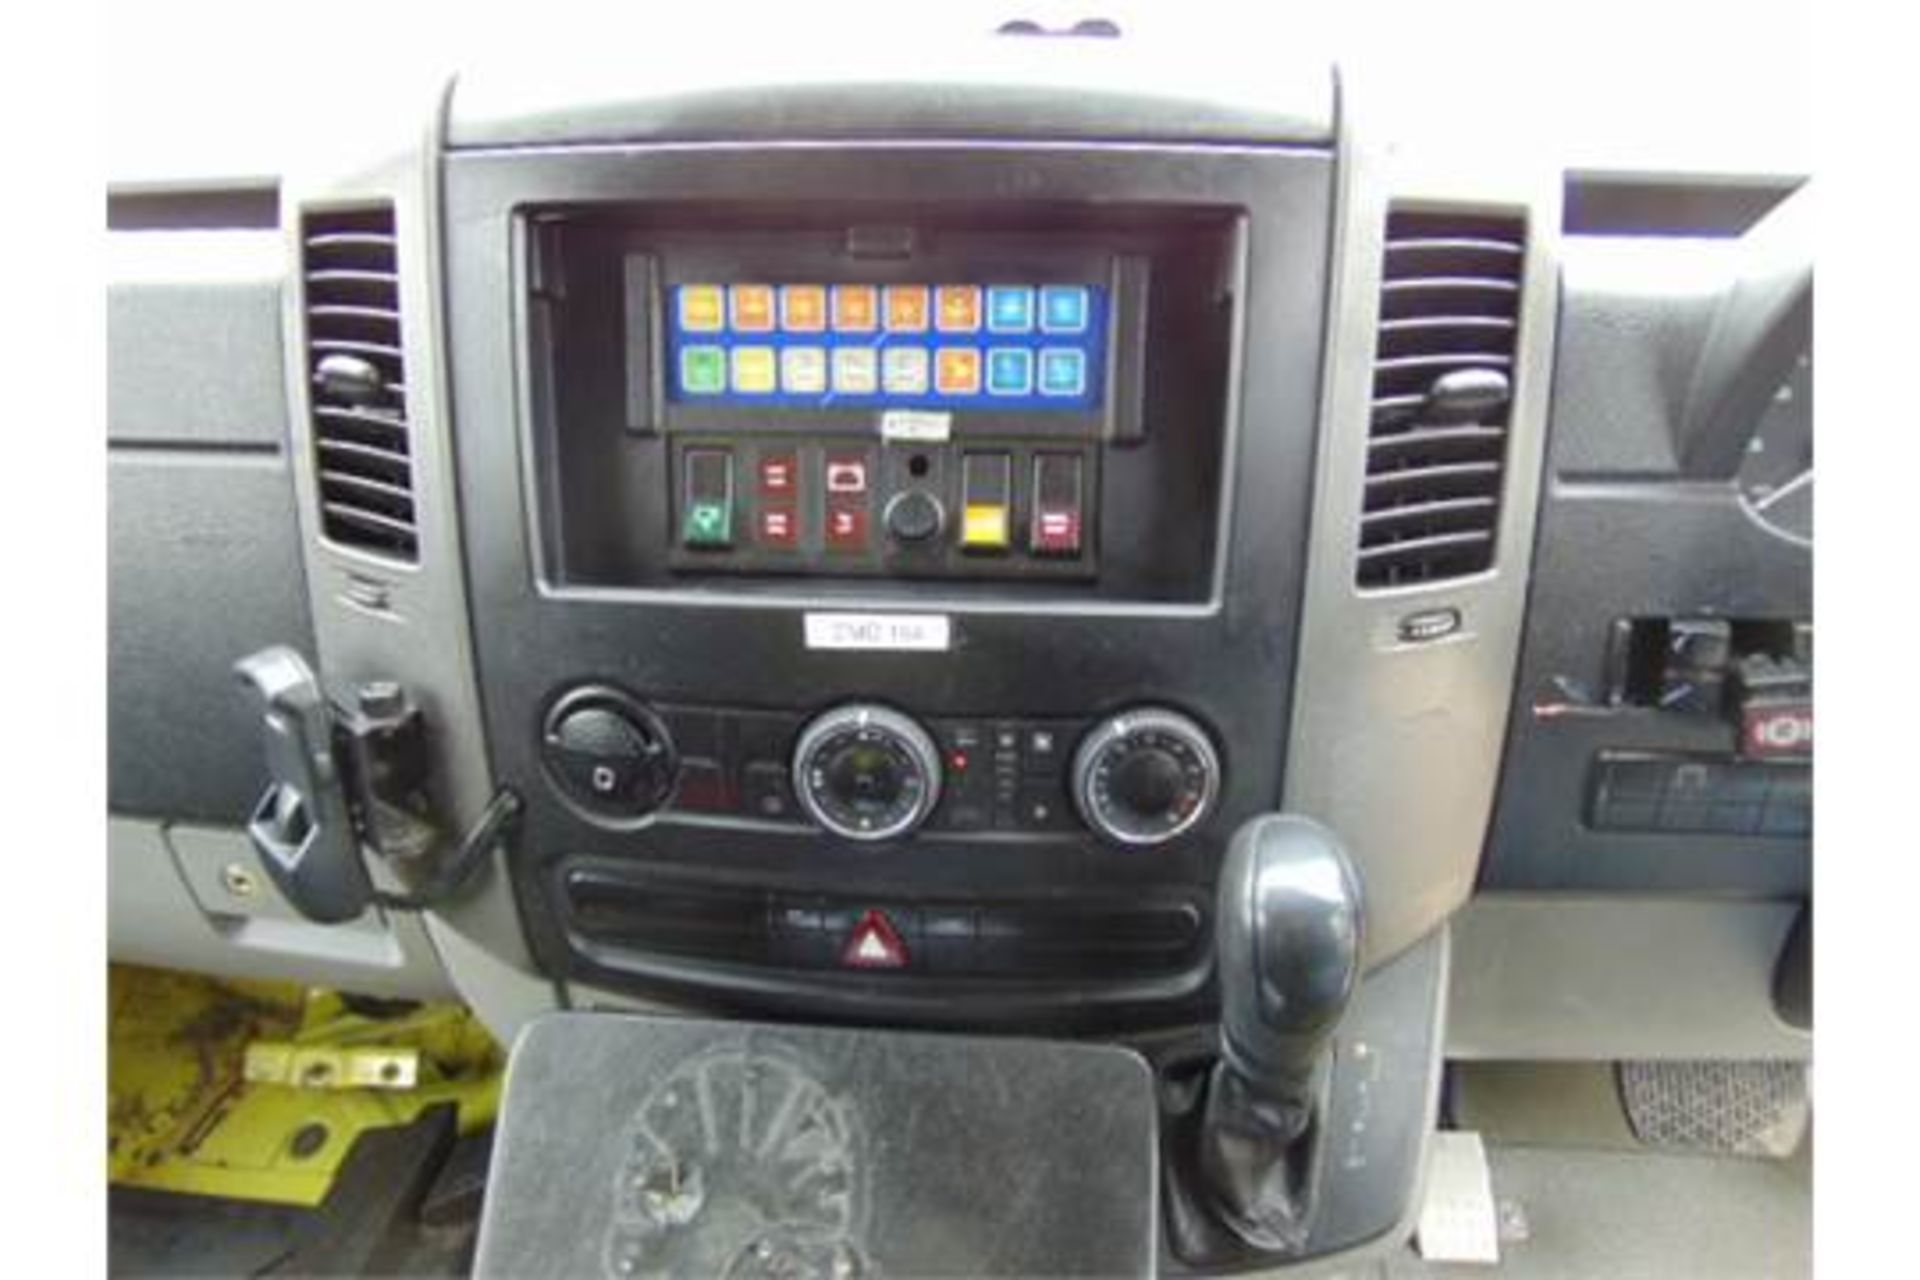 Mercedes Sprinter 515 CDI Turbo diesel ambulance - Image 11 of 20